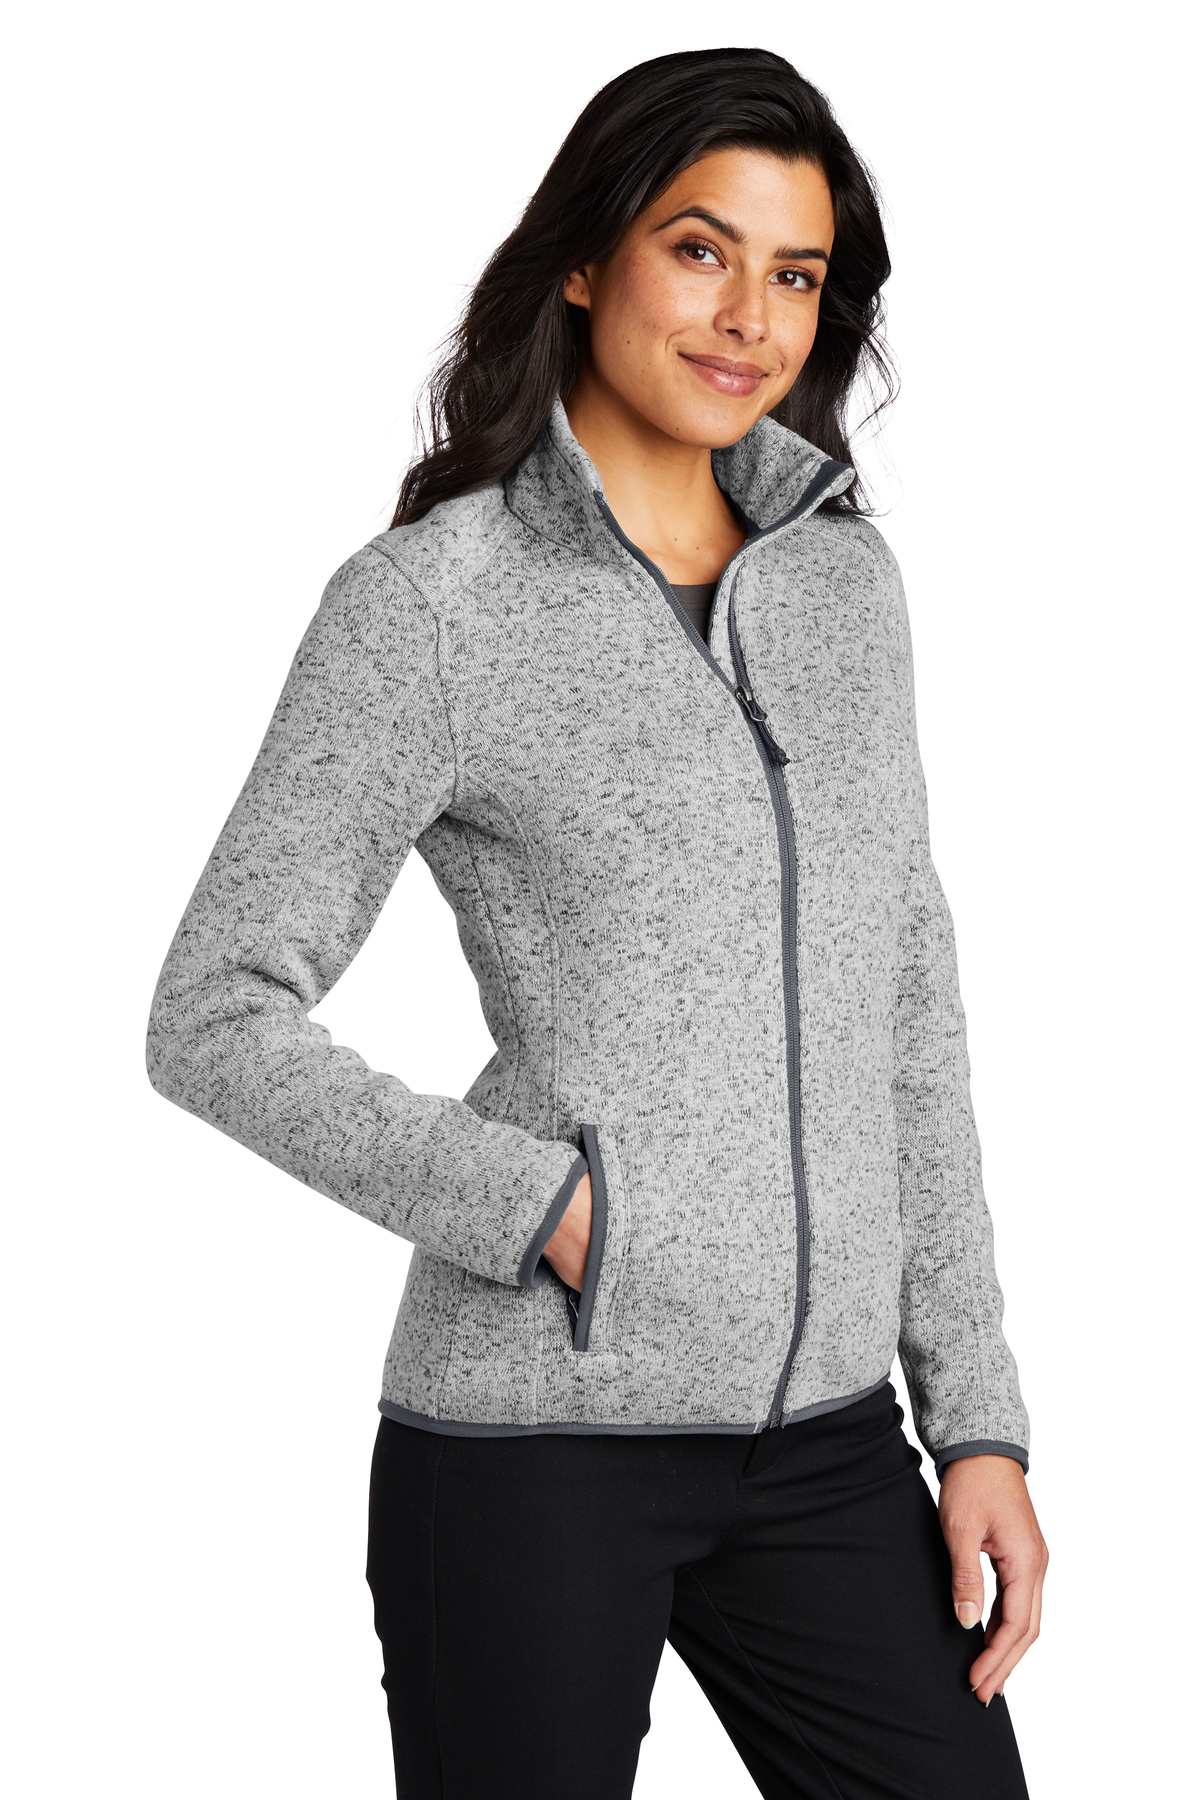 Ladies Sweater Fleece Jacket-L232 | Central Uniforms